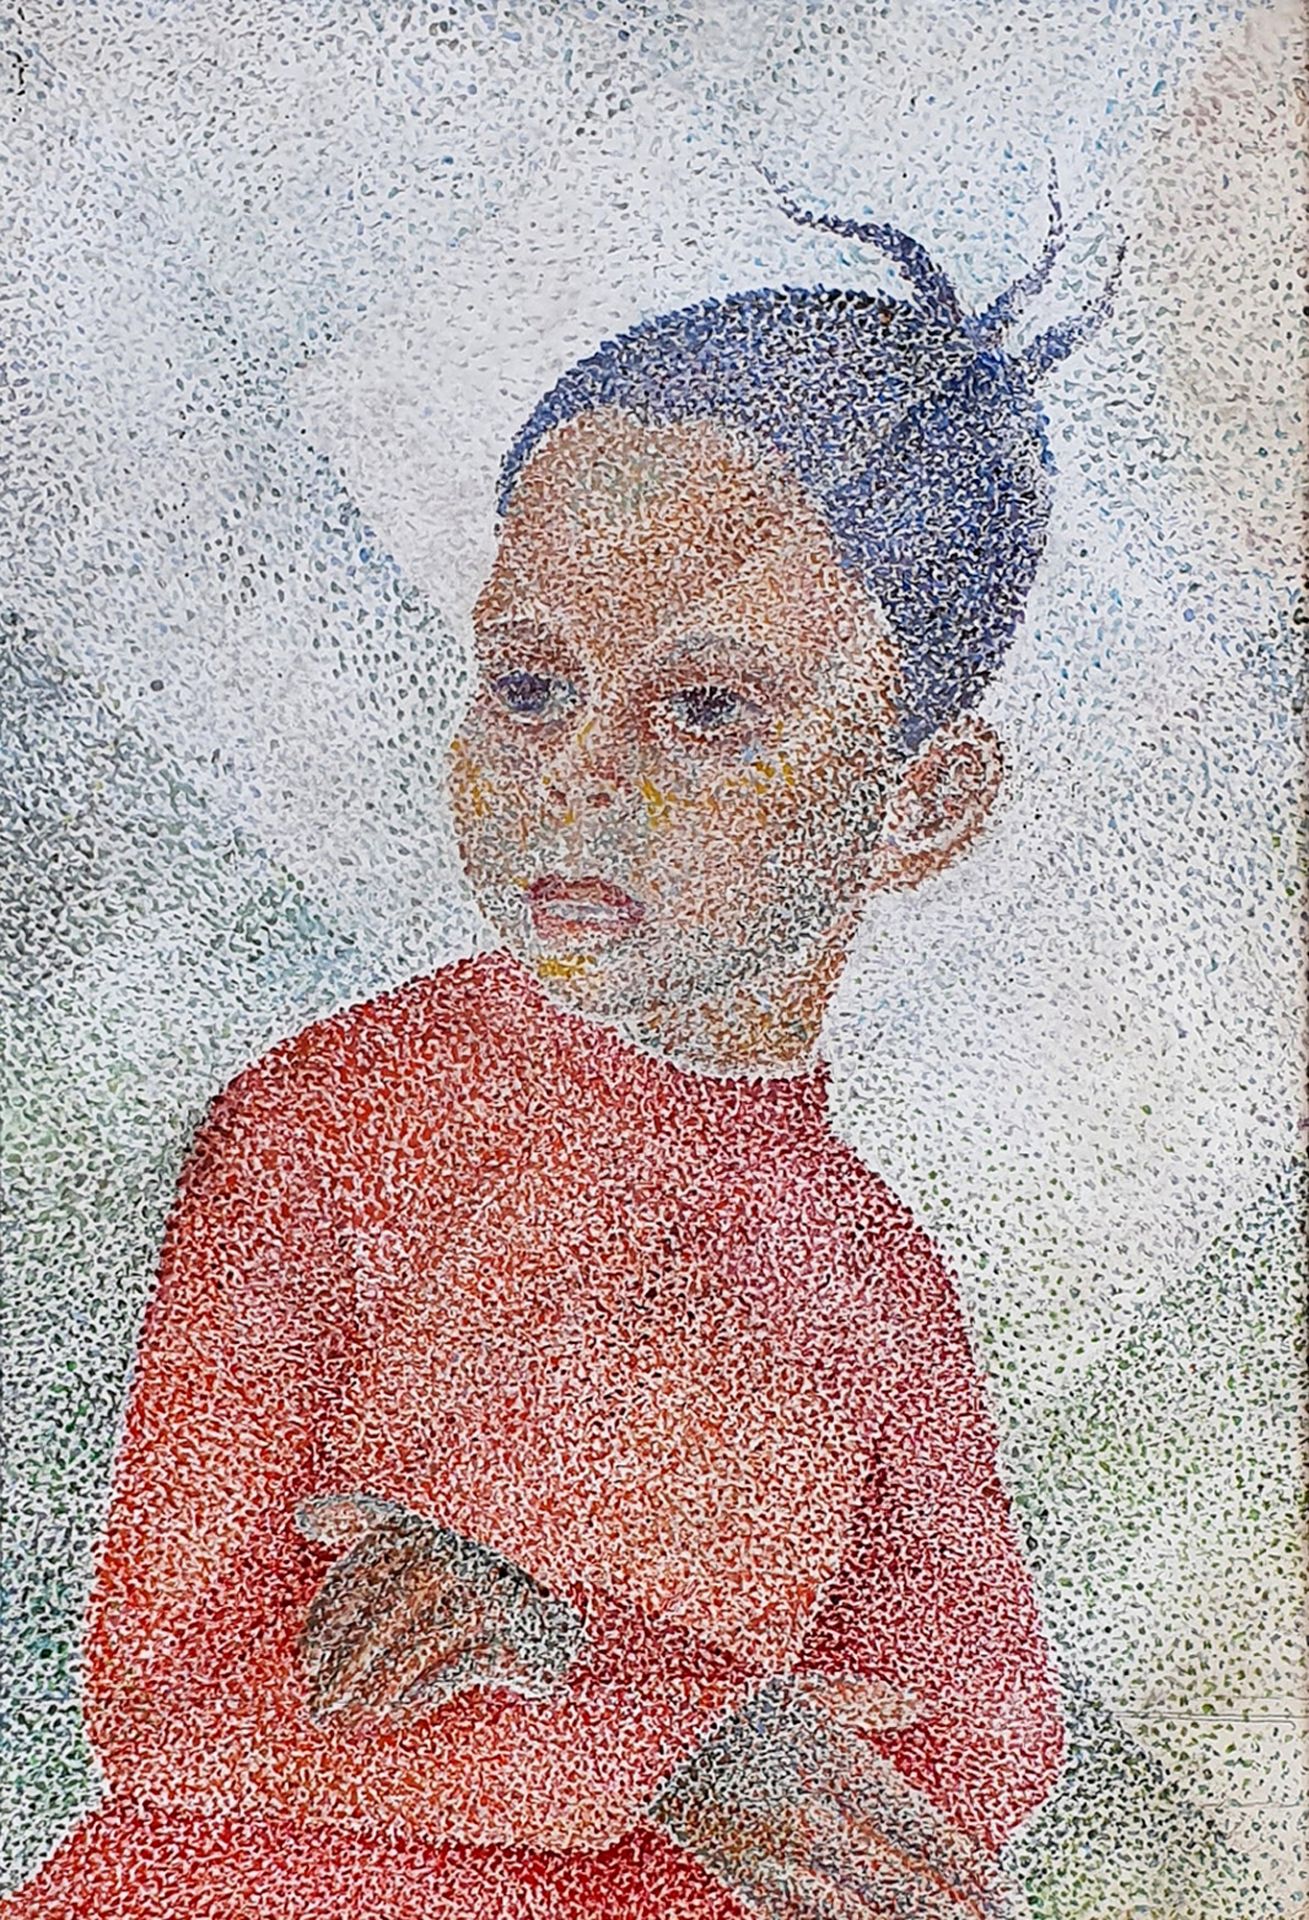 MARIE VOROBIEFF MAREVNA (1892-1984)